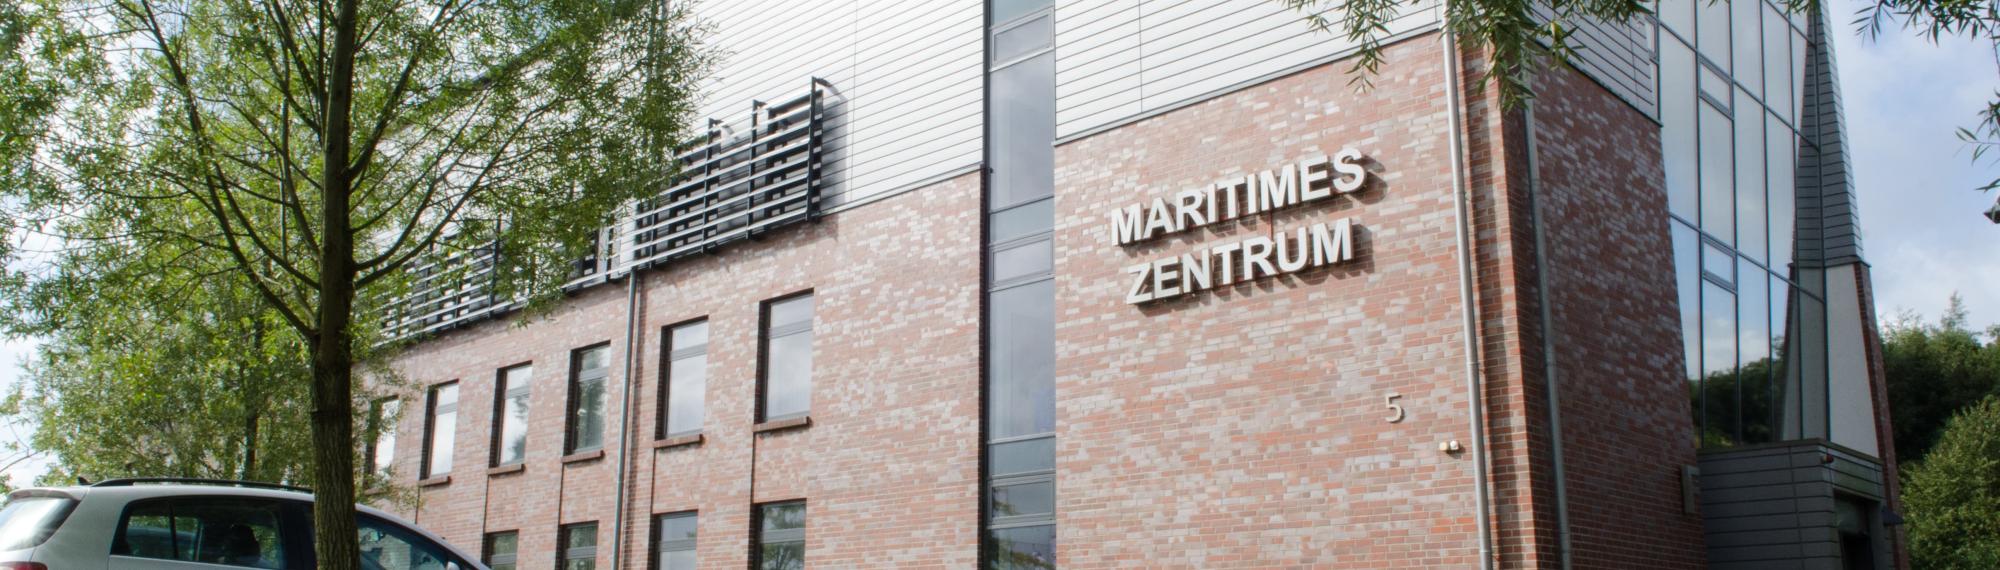 Maritimes Zentrum Flensburg